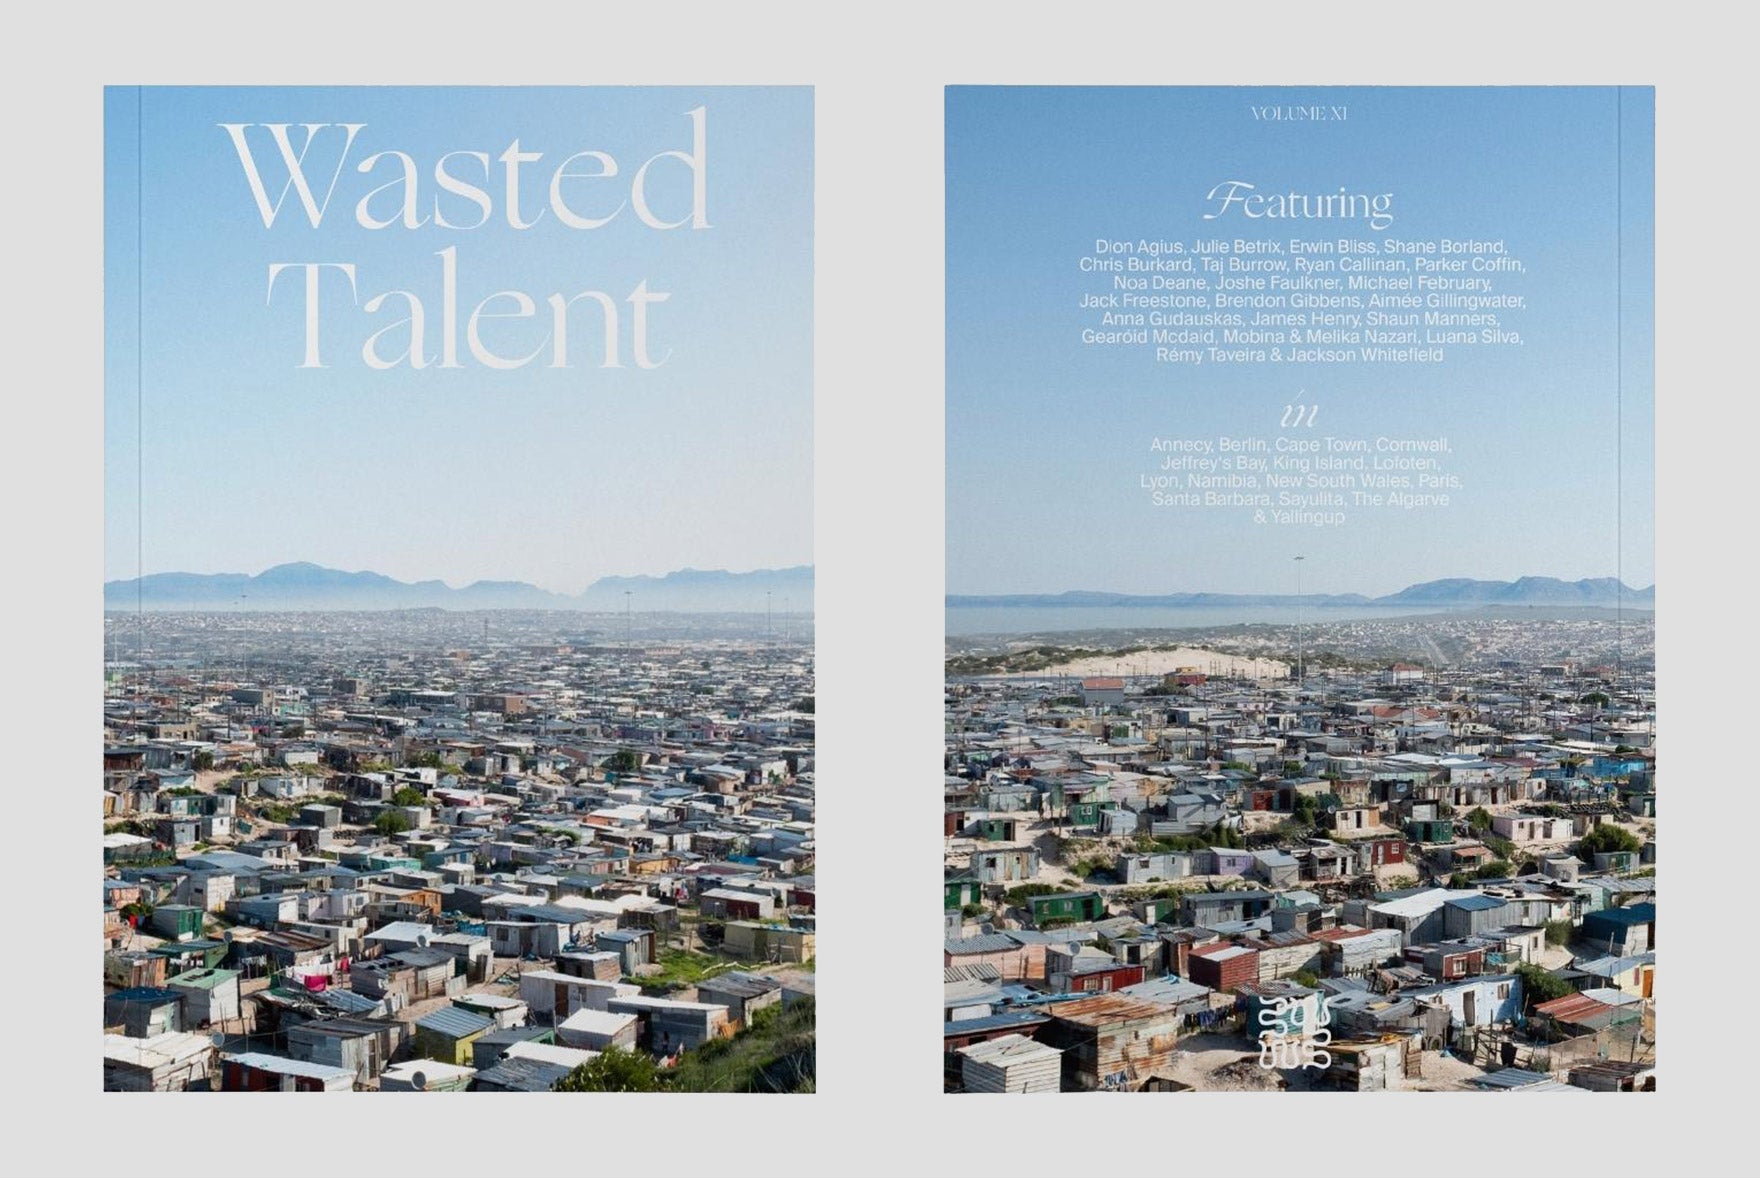 wasted talent magazine volume xi 11